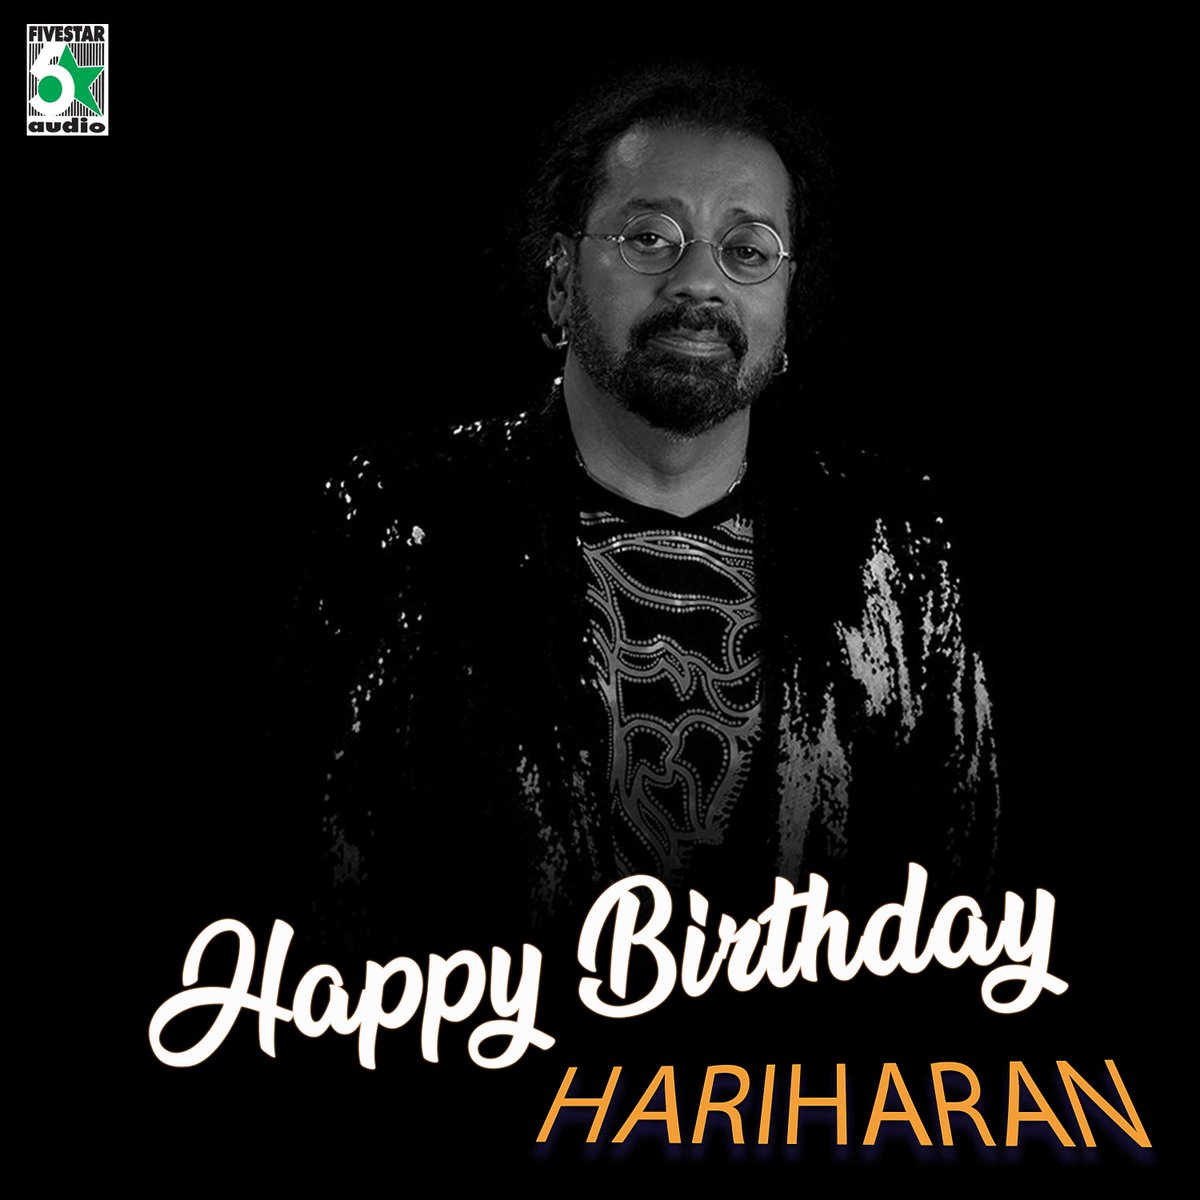 Happy Birthday to the legendary singer Hariharan
 🎵 youtu.be/PQG0Zlyr7XM

 #HBDHariharan #HappyBirthdayHariharan #Hariharan #FiveStarAudio